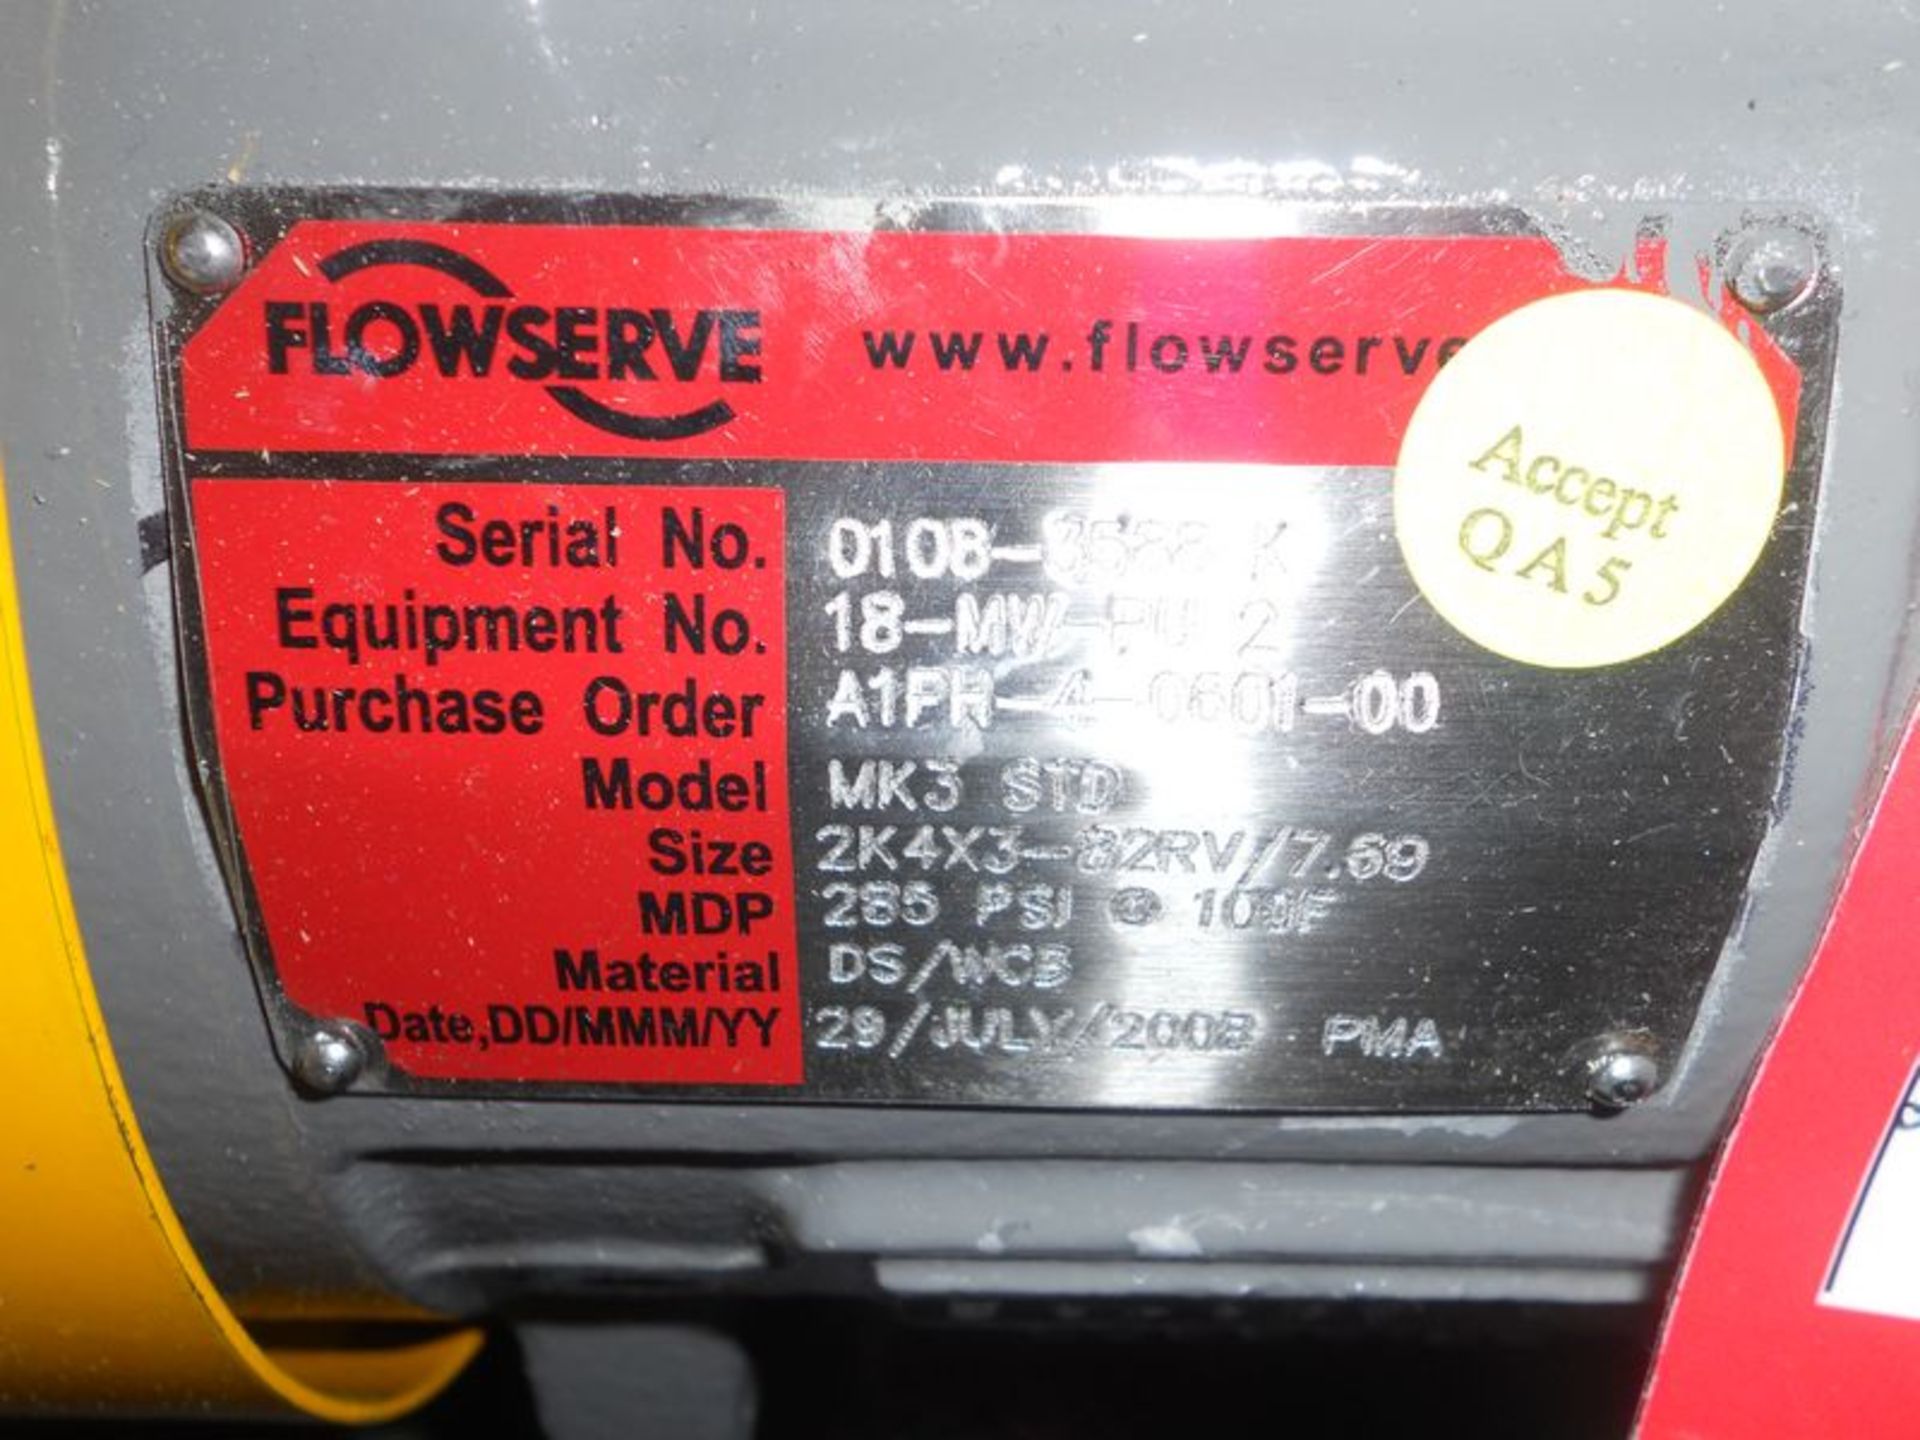 FlowServe MK3 STD centrifugal pump, S/N 0108-3591-L, 4" X 3", 60 HP, MDP 285 psi @ 100 DegF, Size - Image 5 of 6